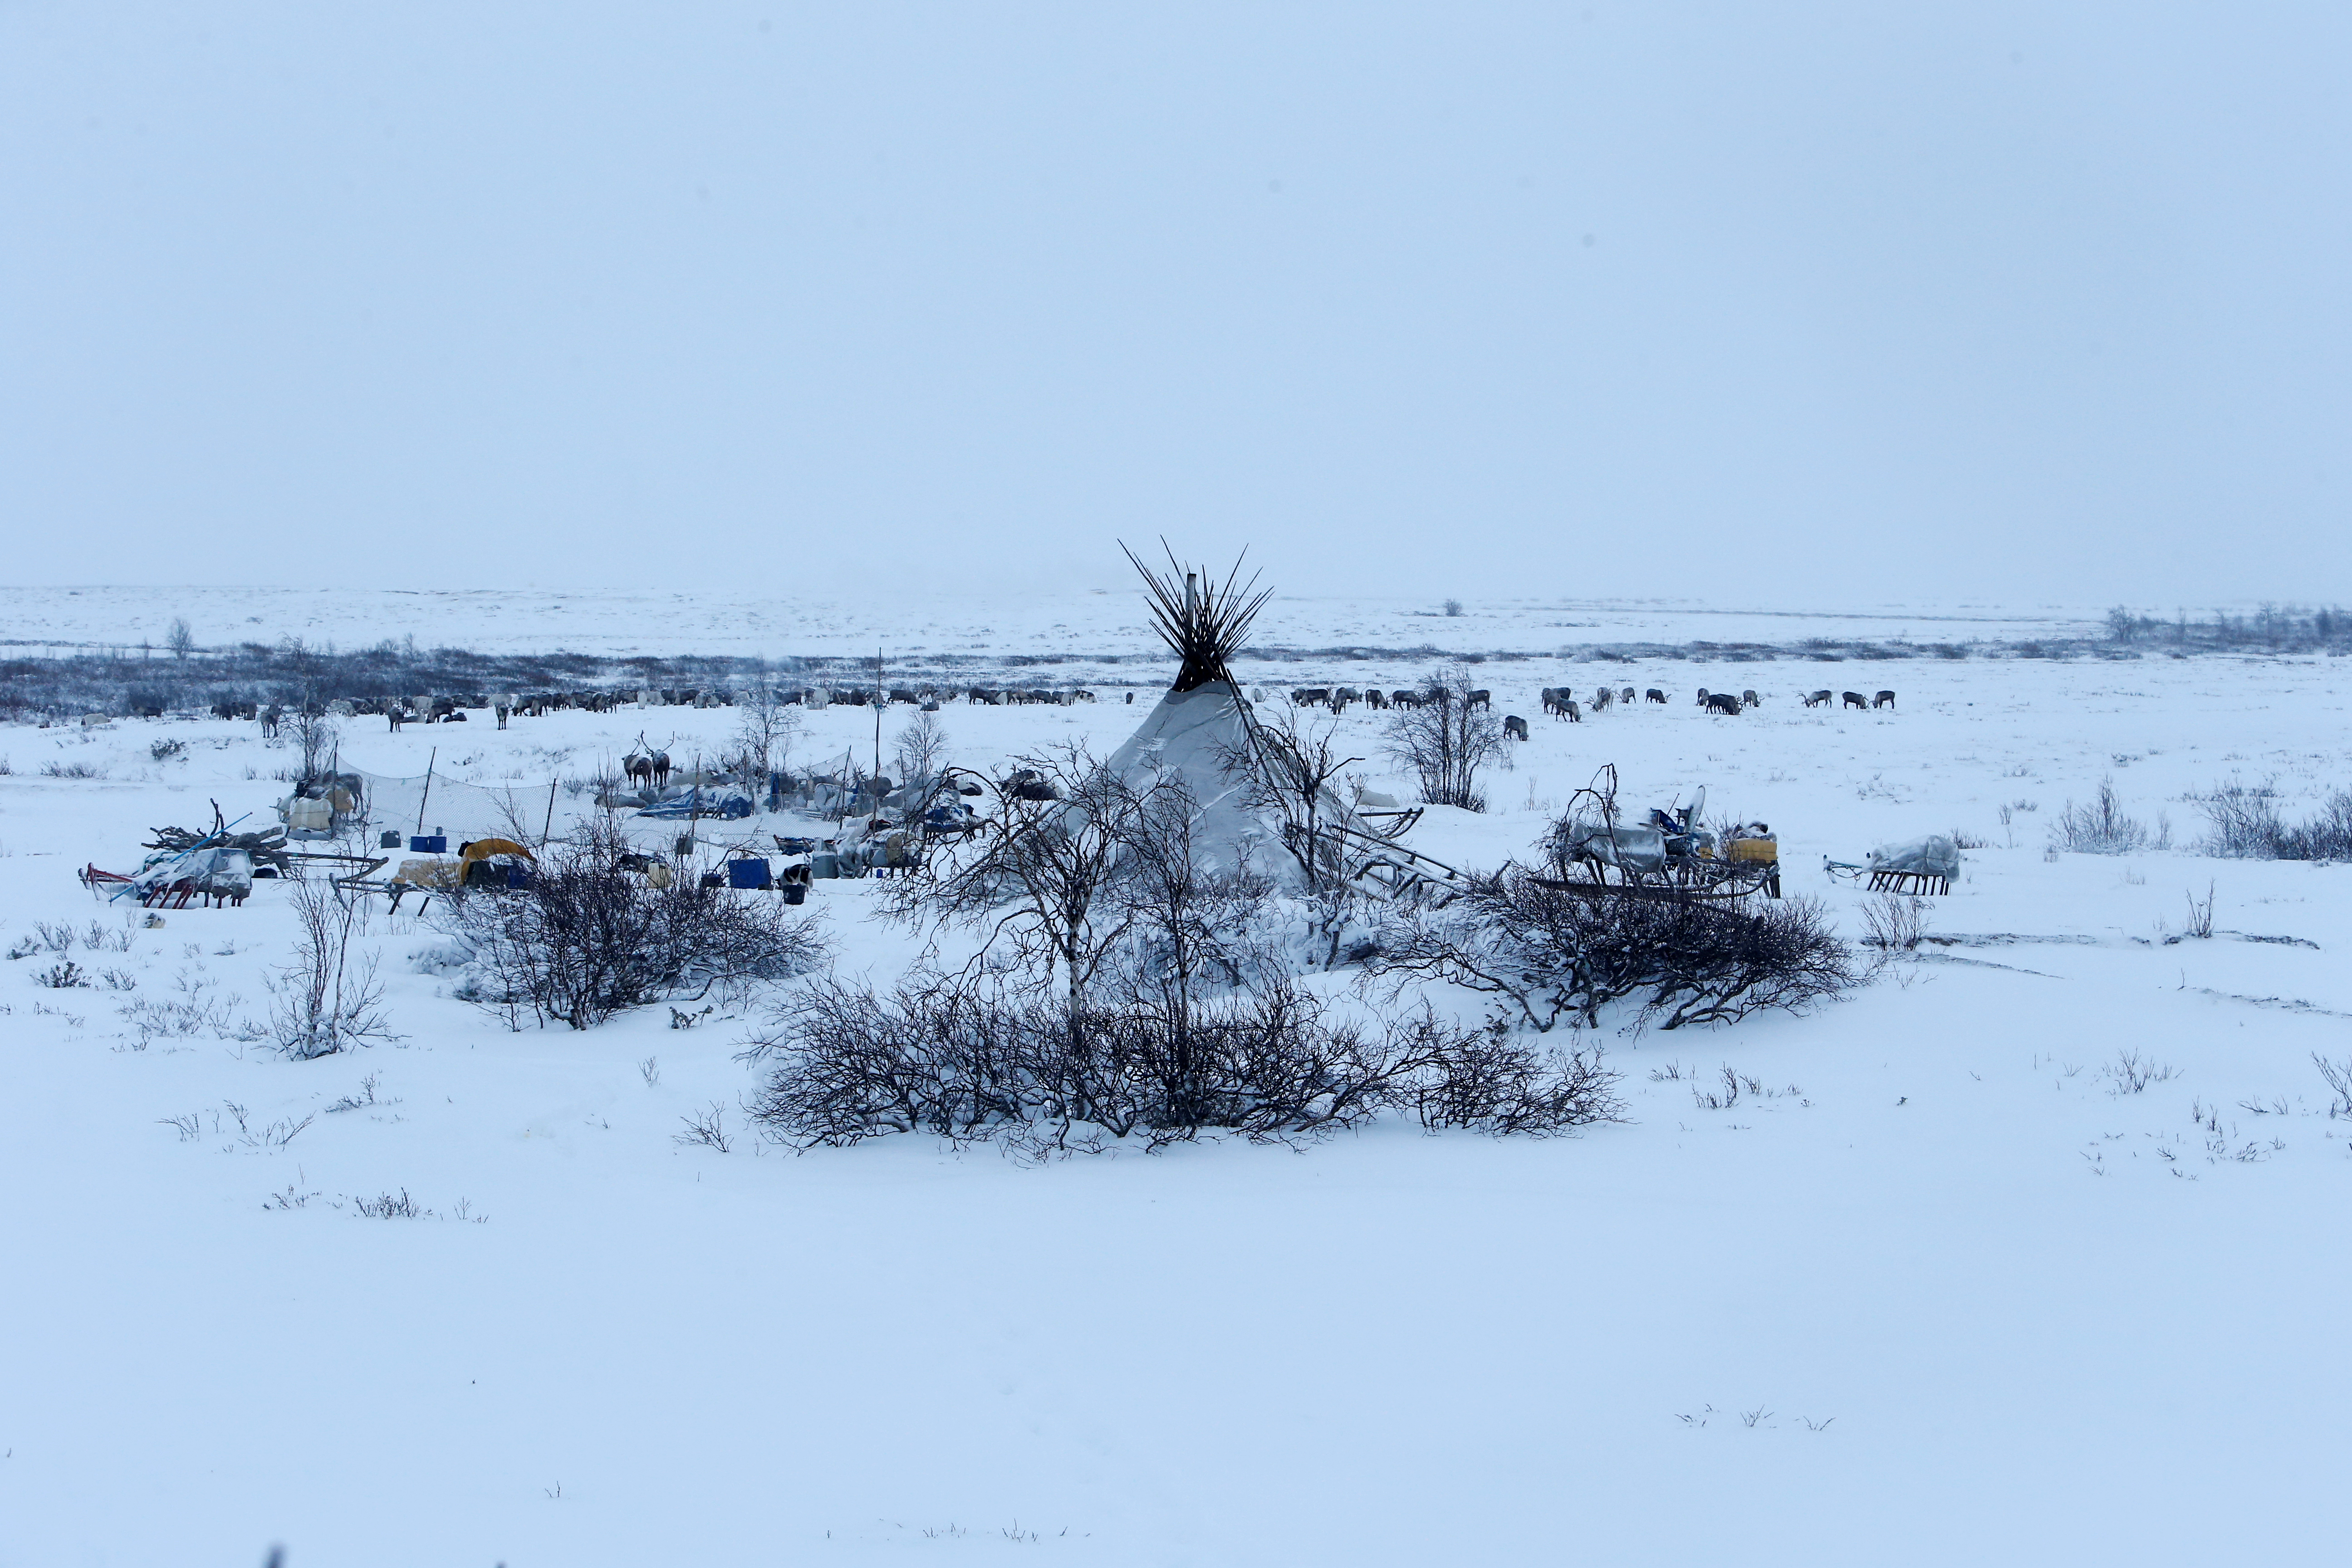 A tent belonging to reindeer herders in the tundra, Nov. 27, 2016.